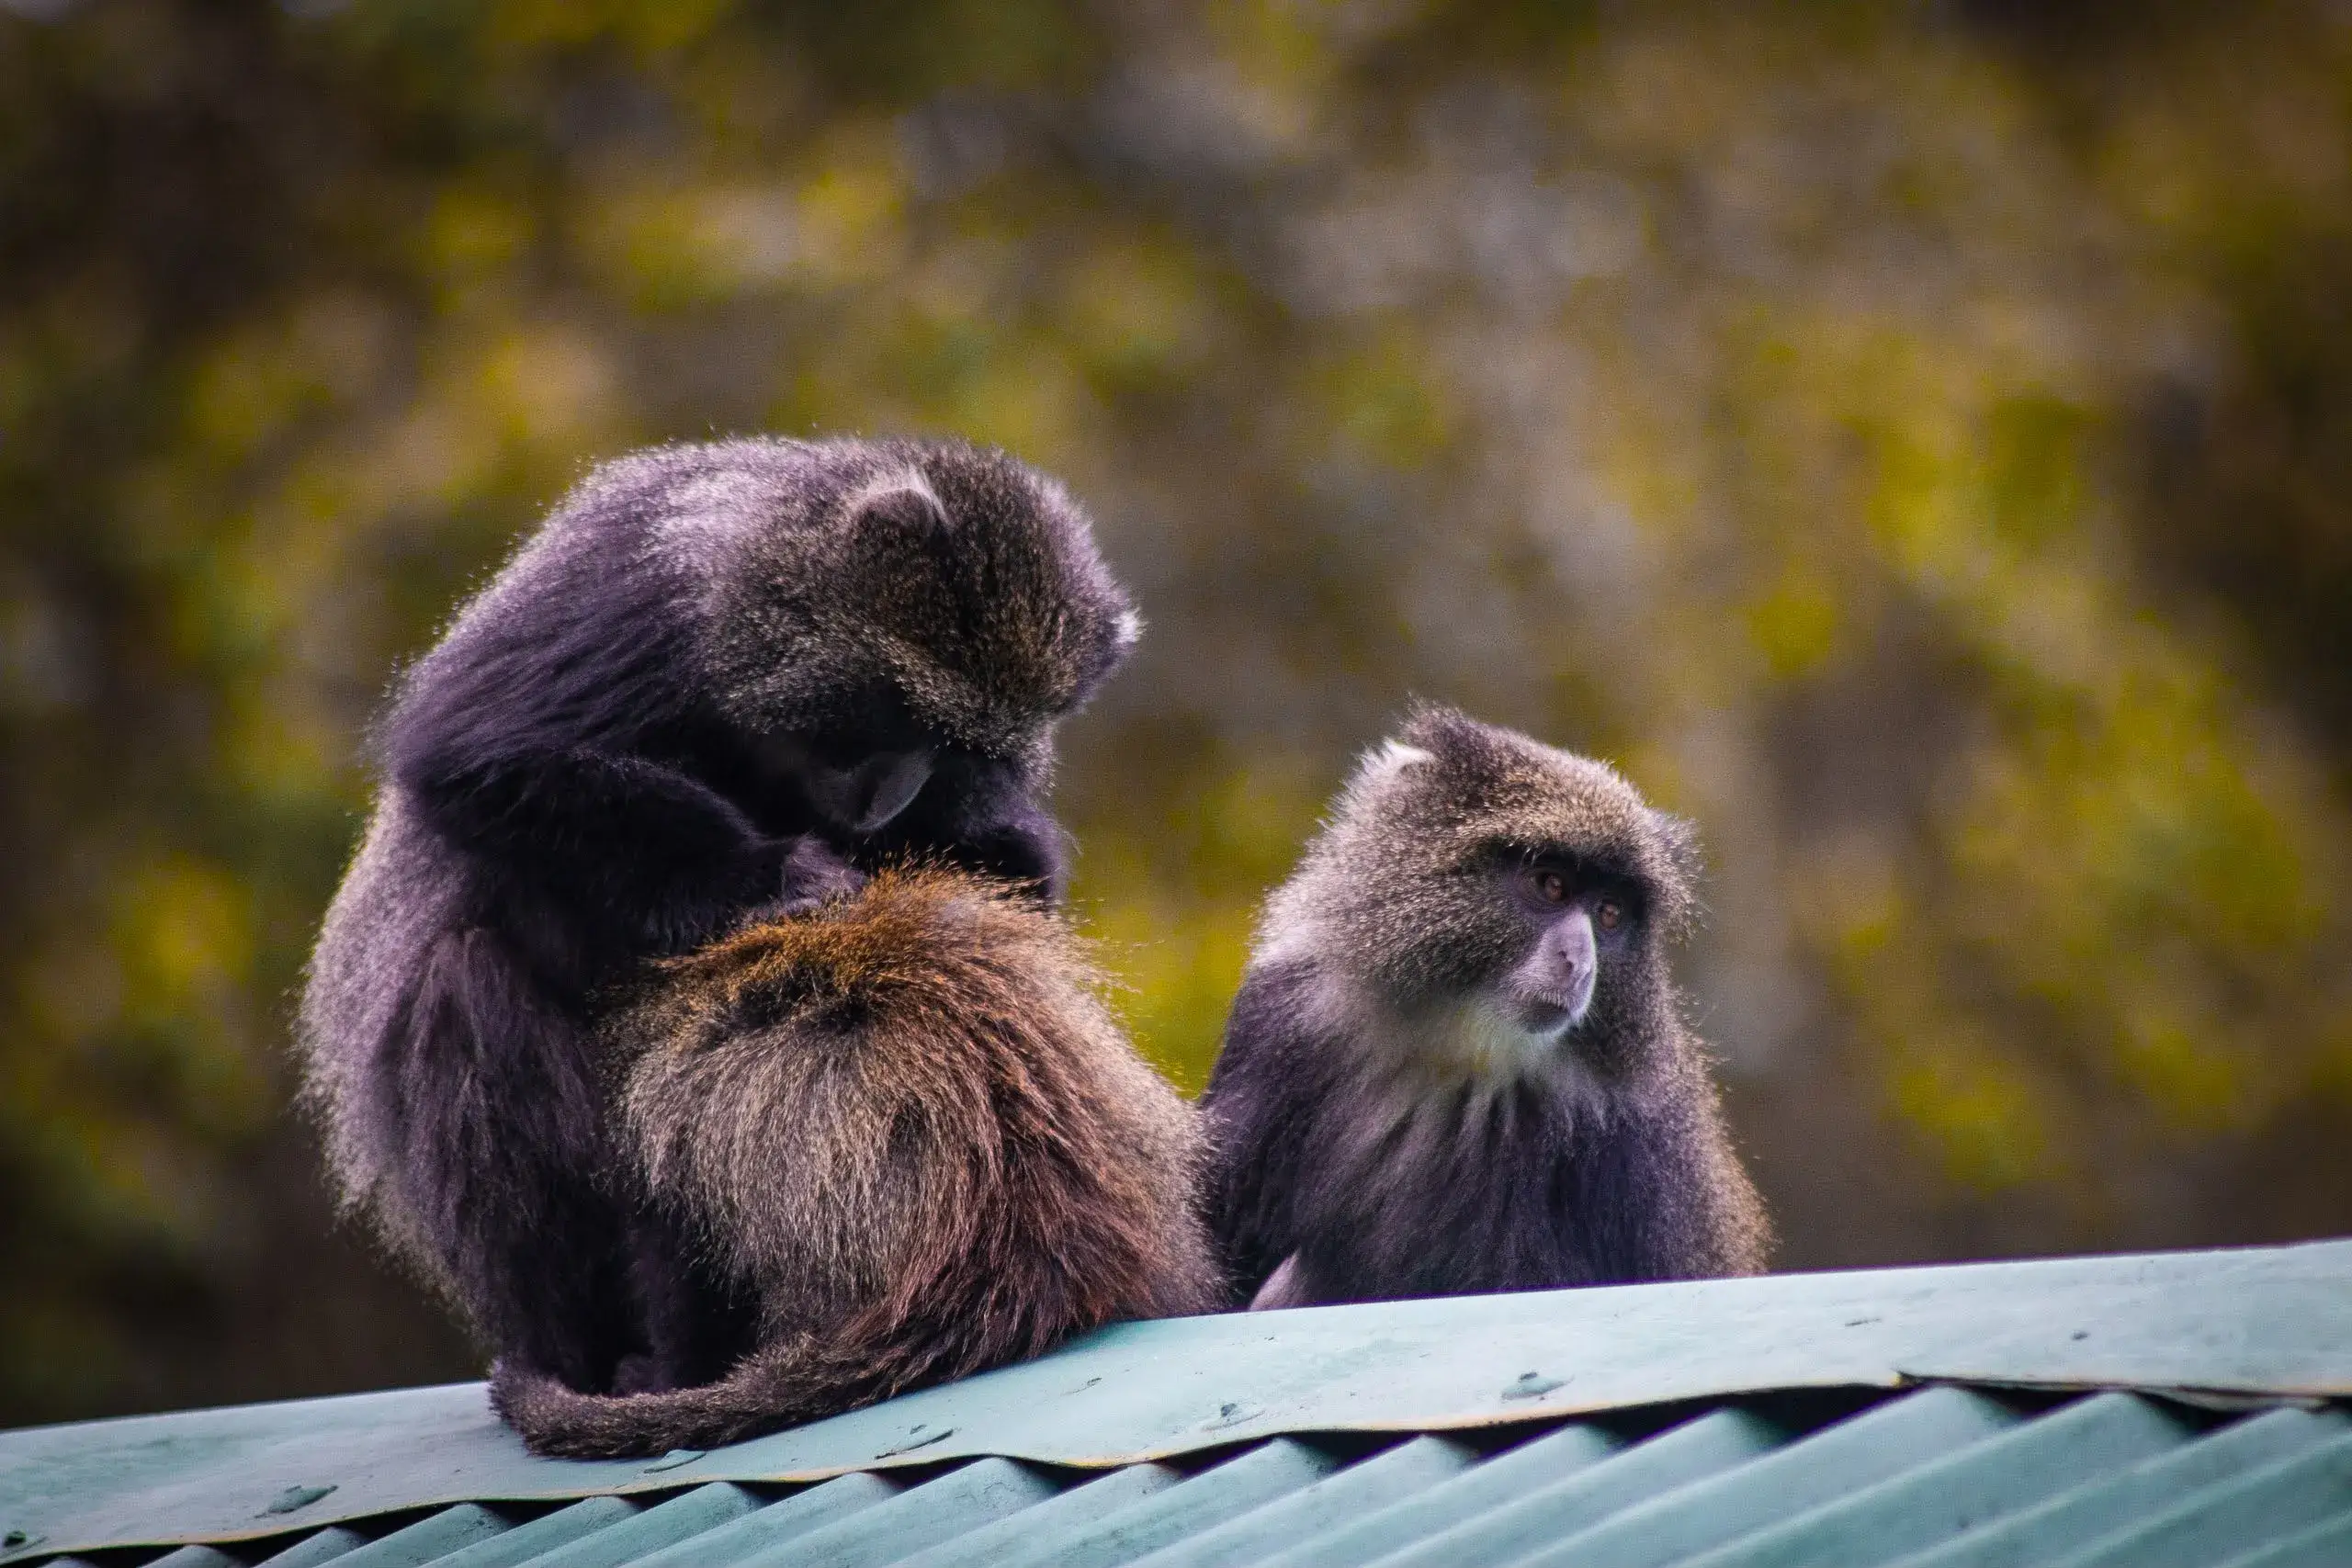 Samango monkeys spotted in Tanzanian jungles while trek